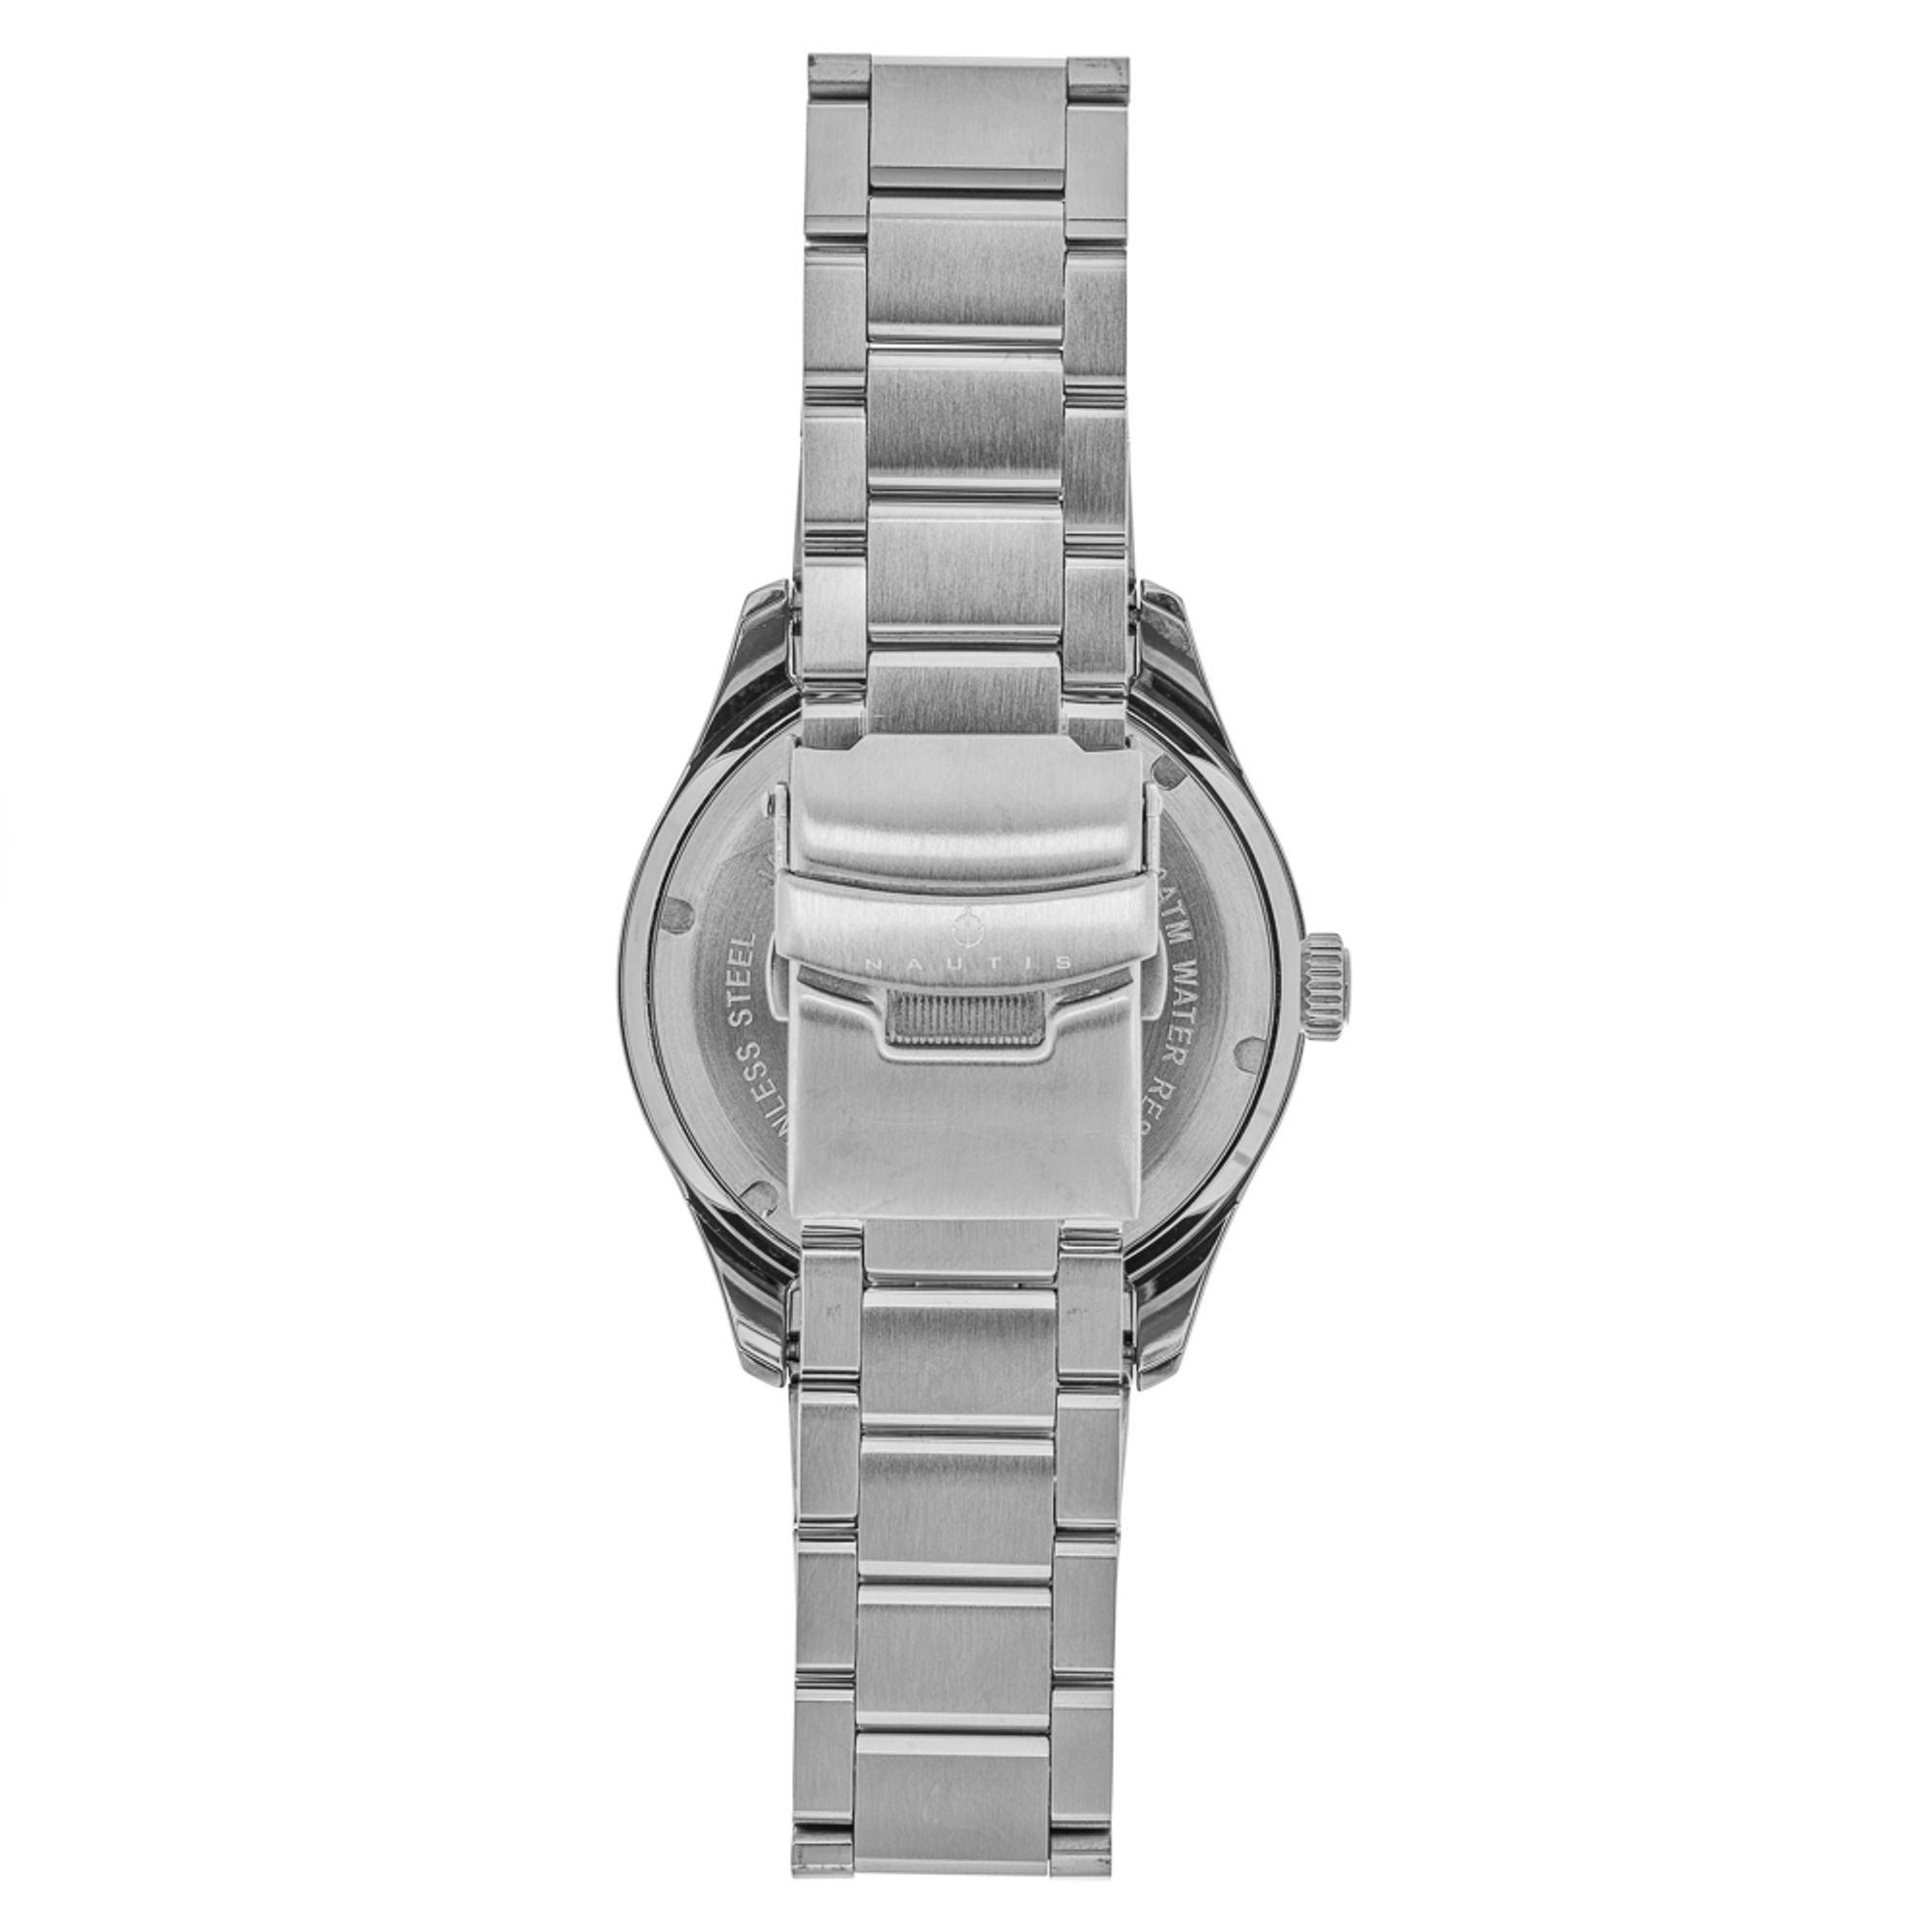 Nautis Holiss Automatic Watch - Silver/Black - NAUN103-1